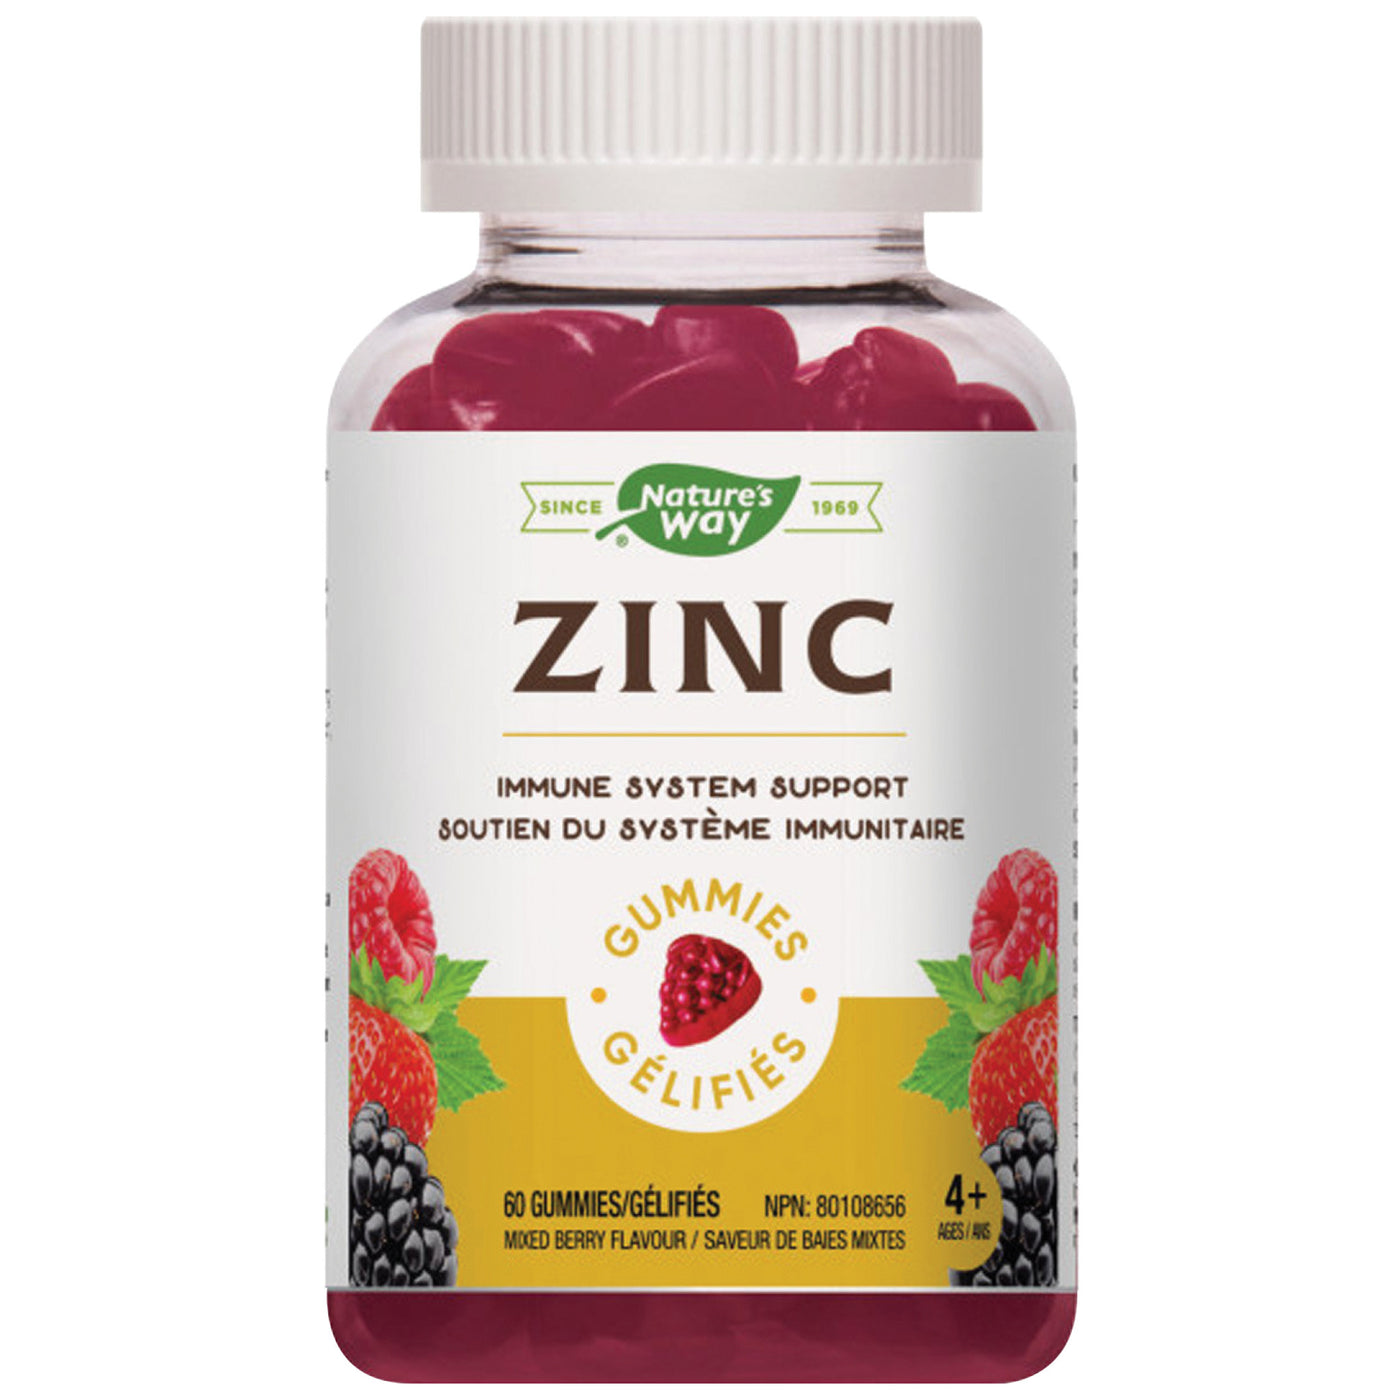 Zinc Immune System Support